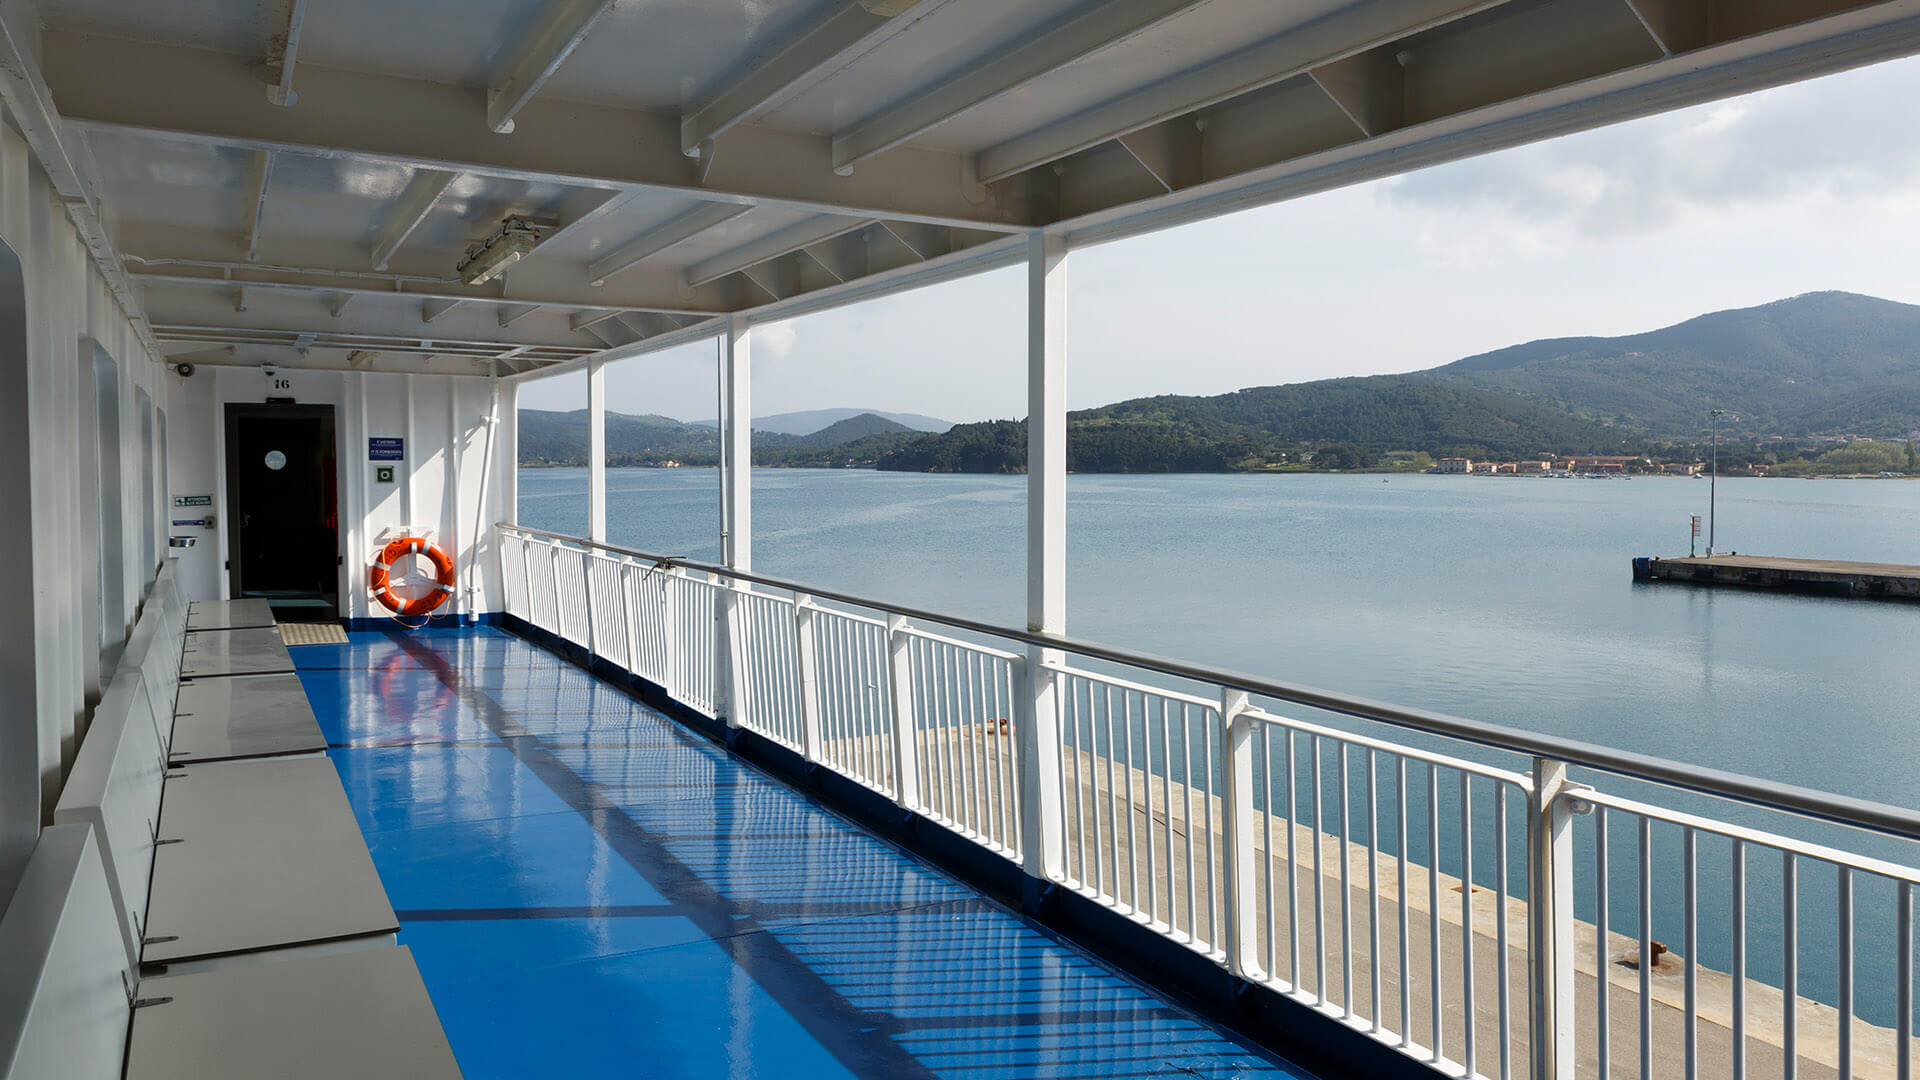 Corridoio laterale spazio aperti traghetto Blu Navy isola Elba